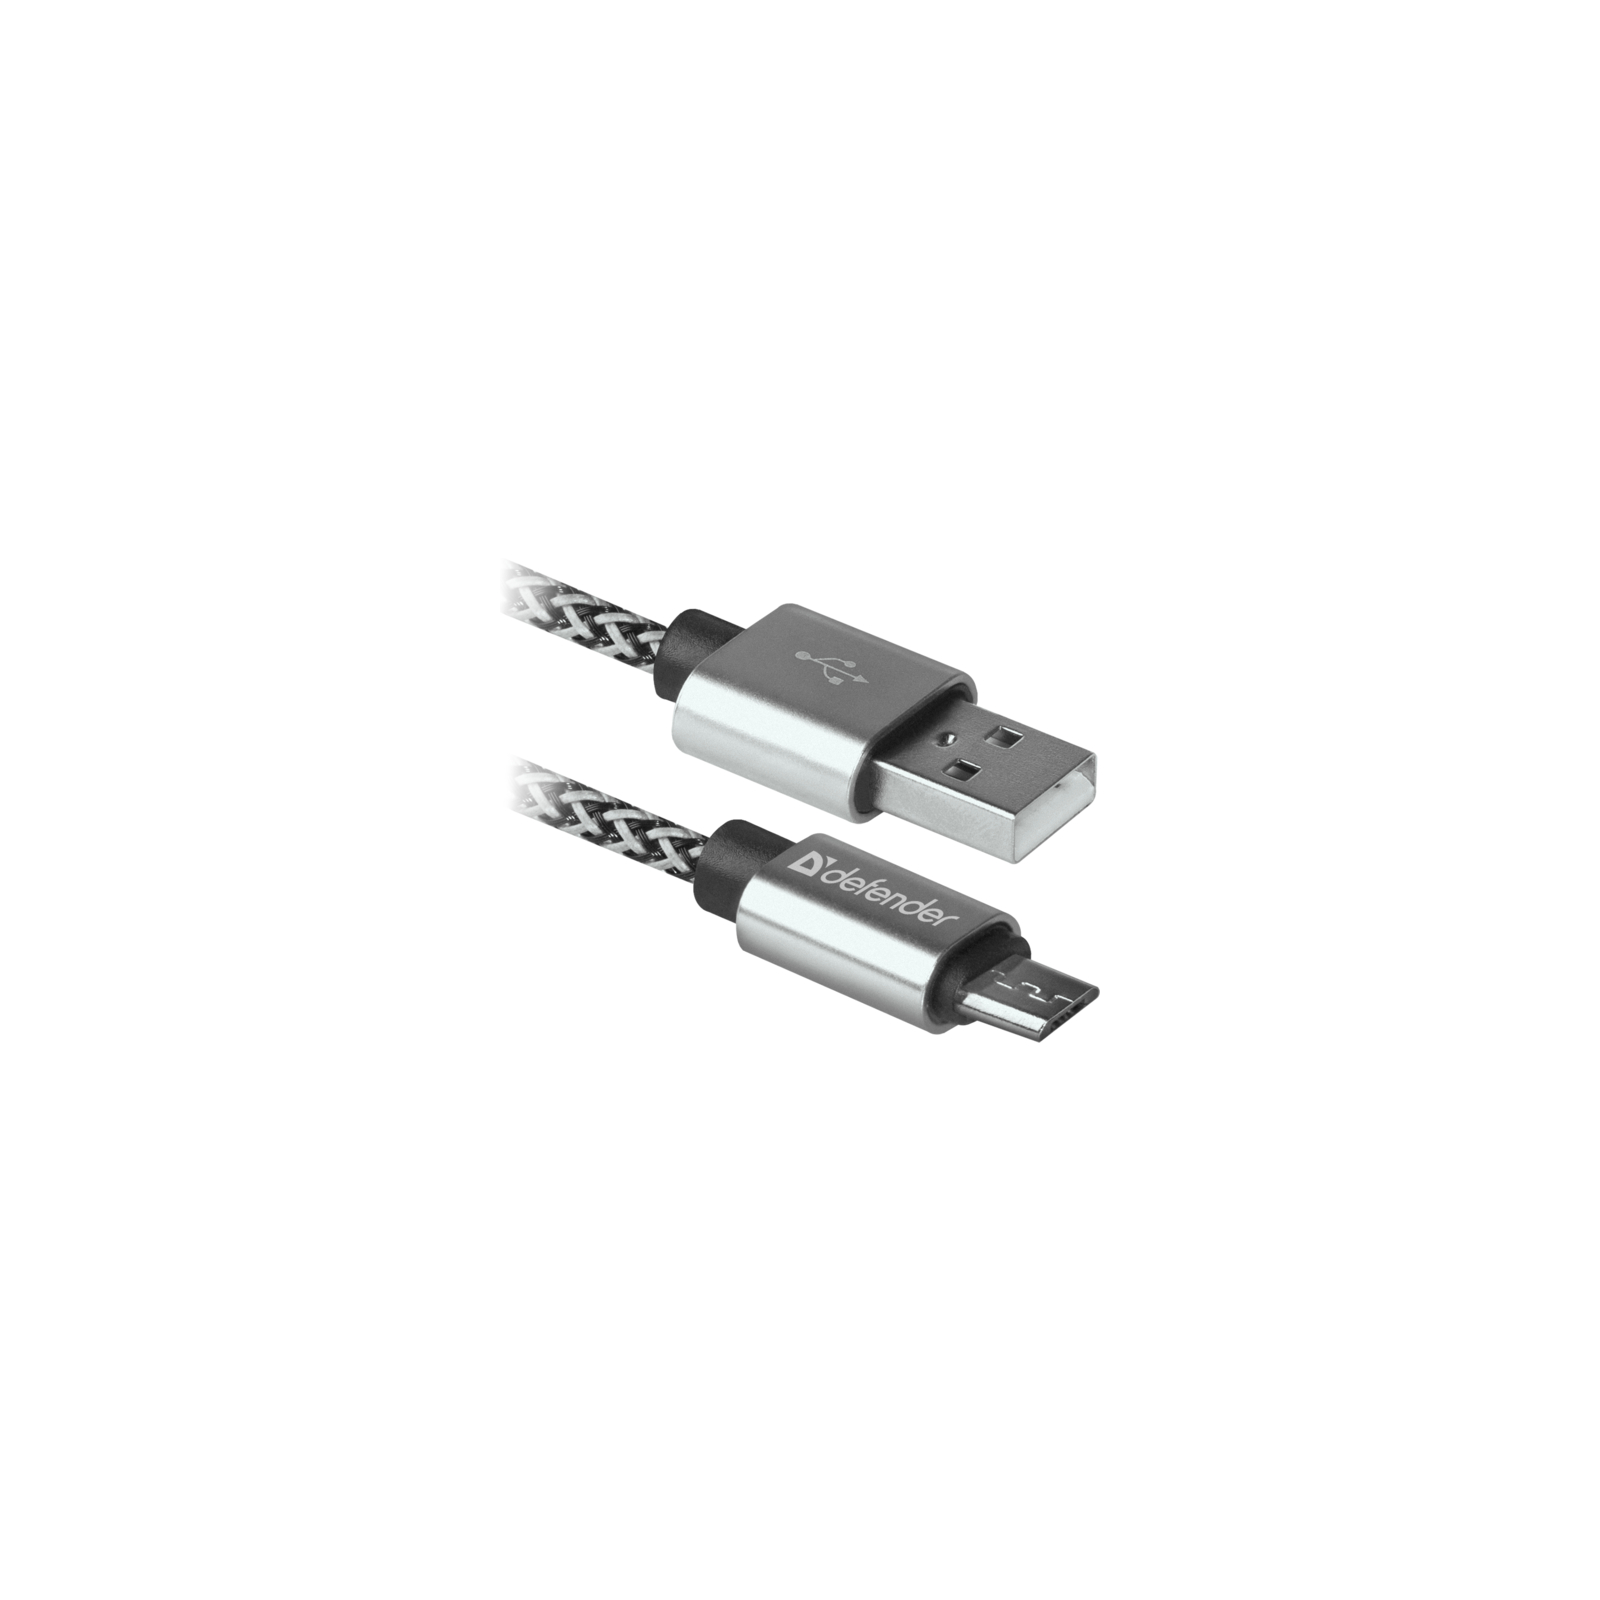 Дата кабель USB 2.0 AM to Micro 5P 1.0m USB08-03T PRO black Defender (87802)